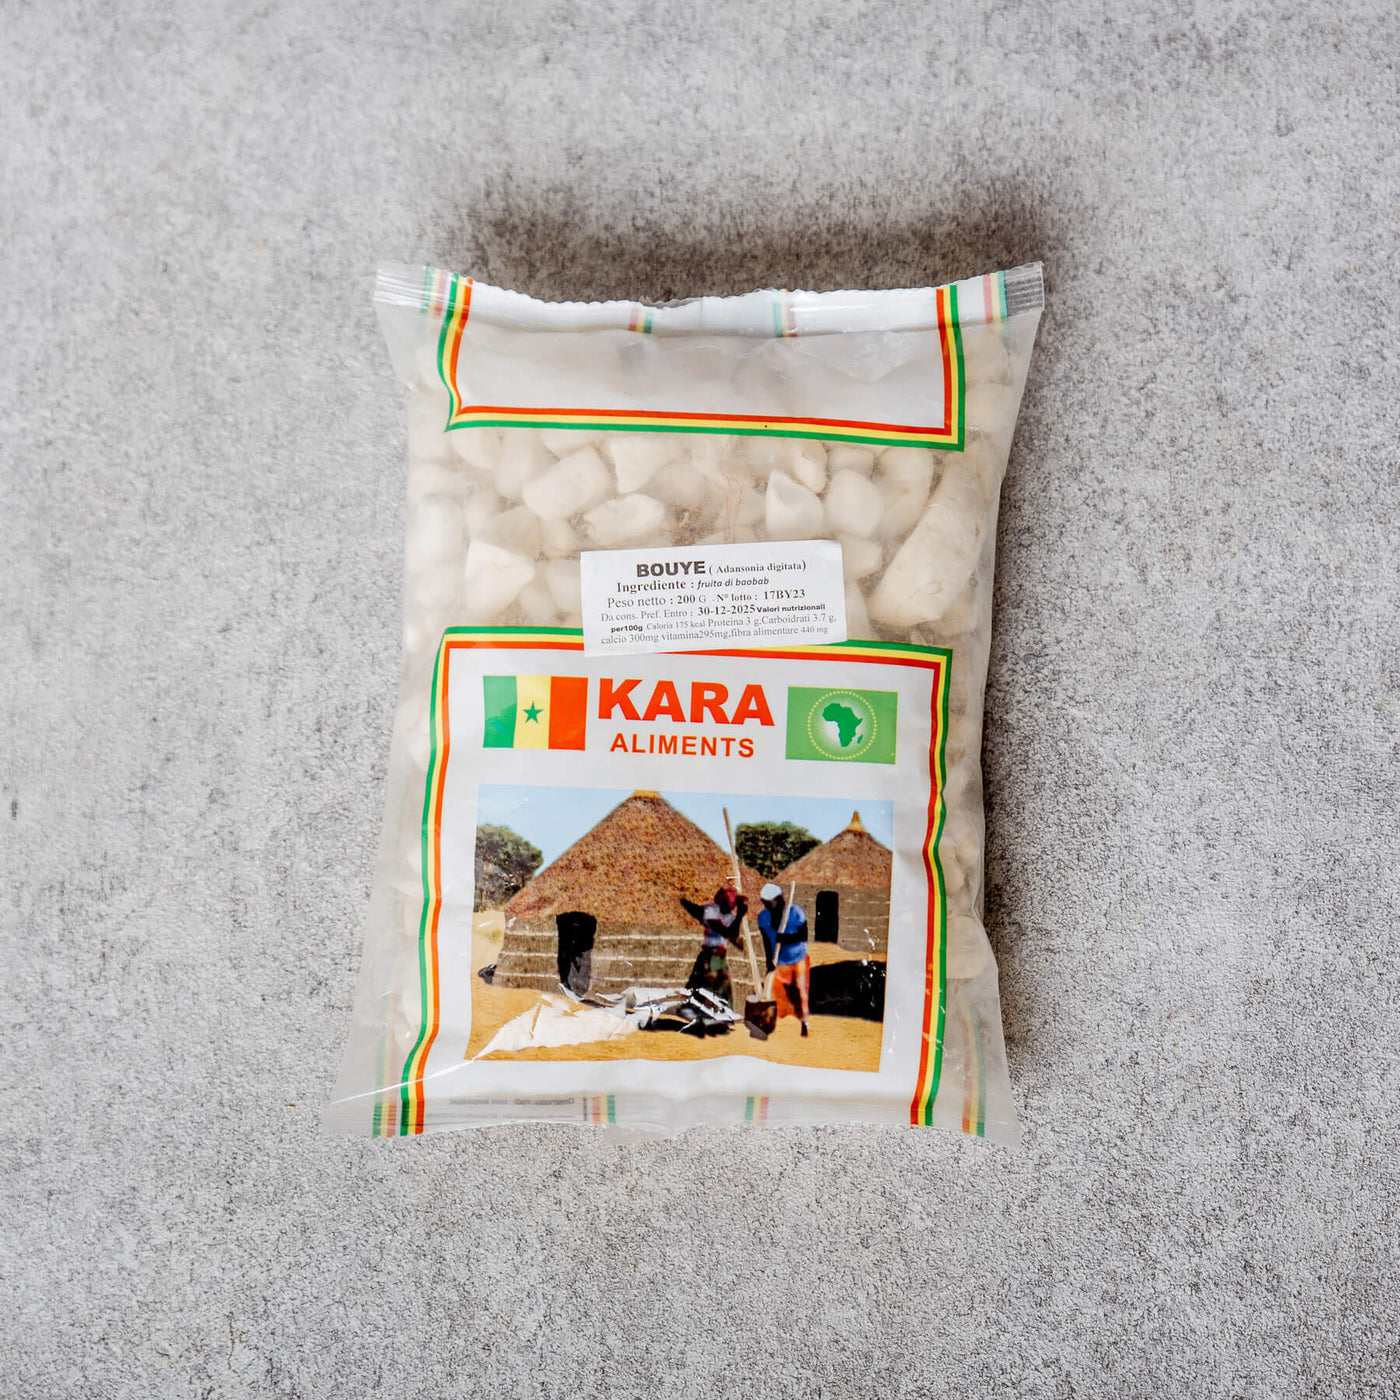 Kara Aliments - Baobab Bouye